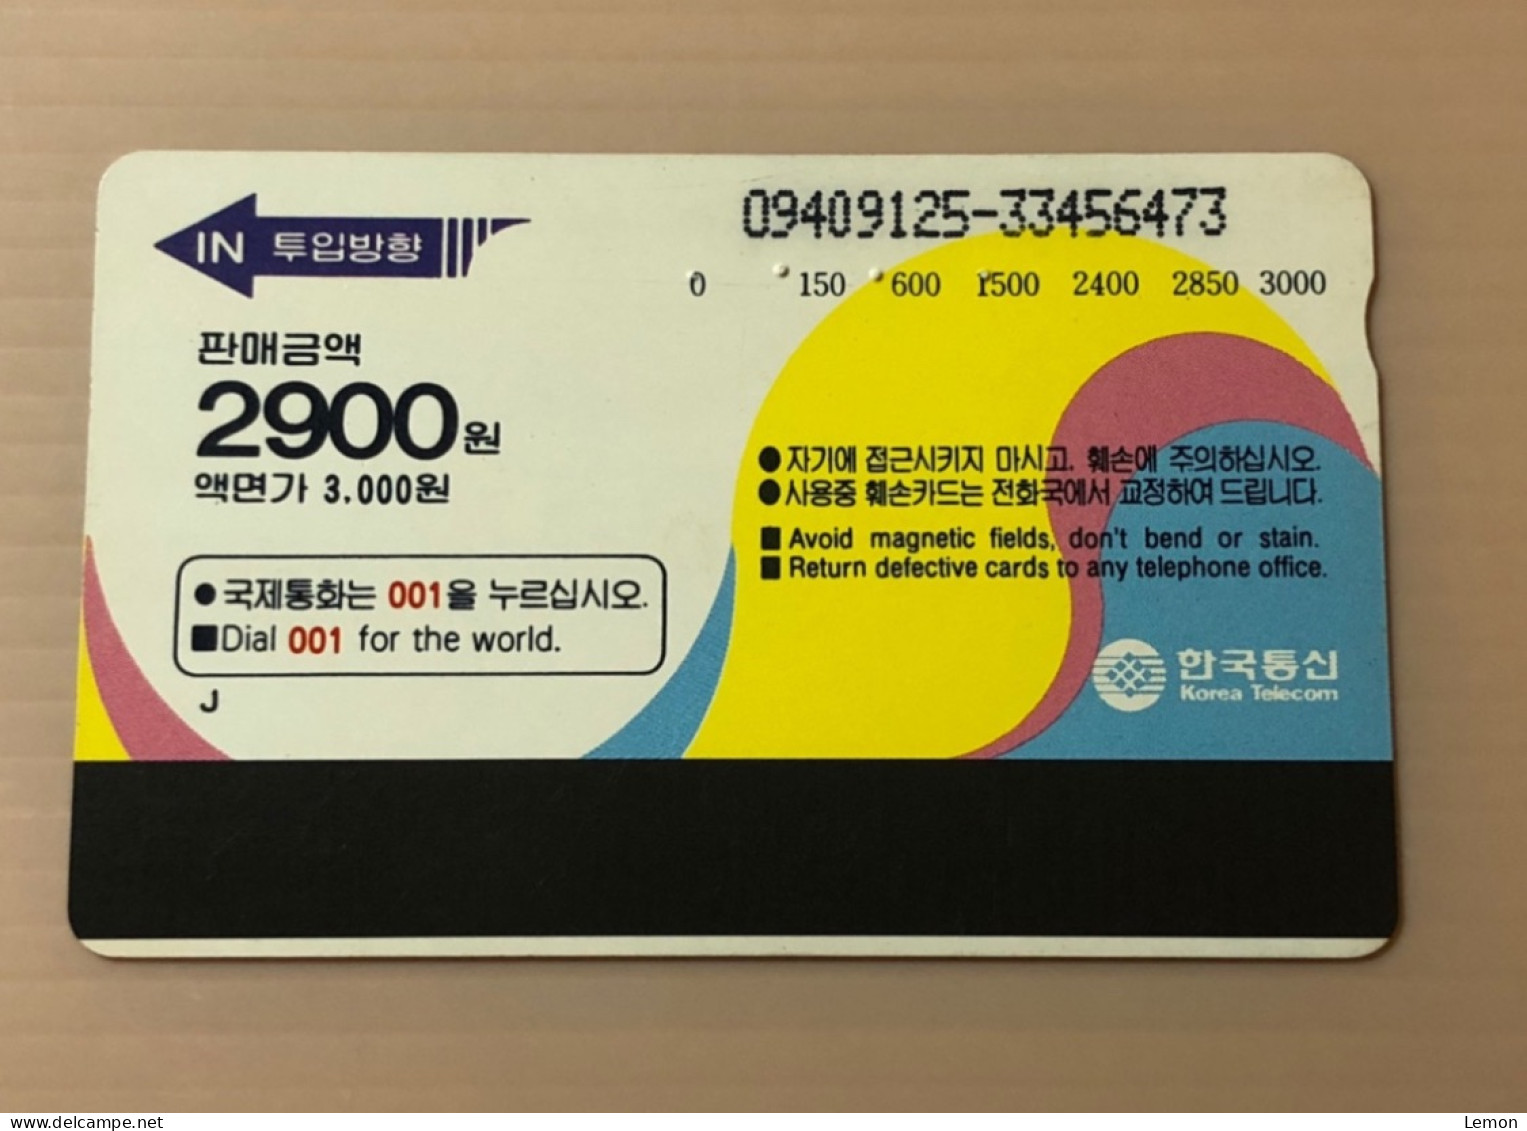 Korea Phonecard, Yellow Flower, 1 Used Card - Korea, South